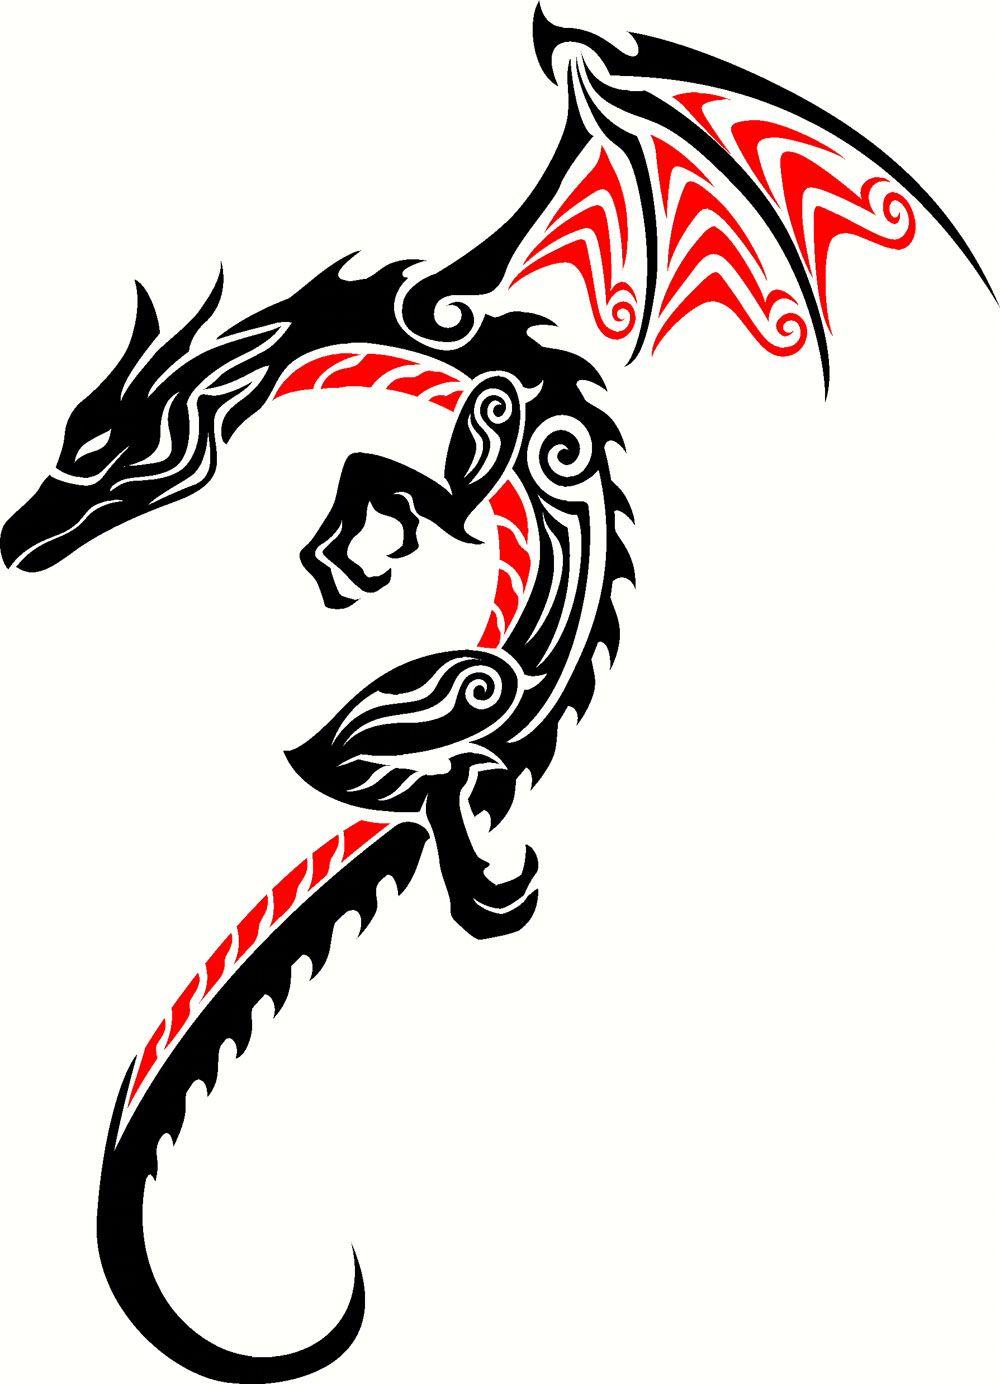 Flying Dragon Logo - Wall Stickers Blog Archive Flying Dragon